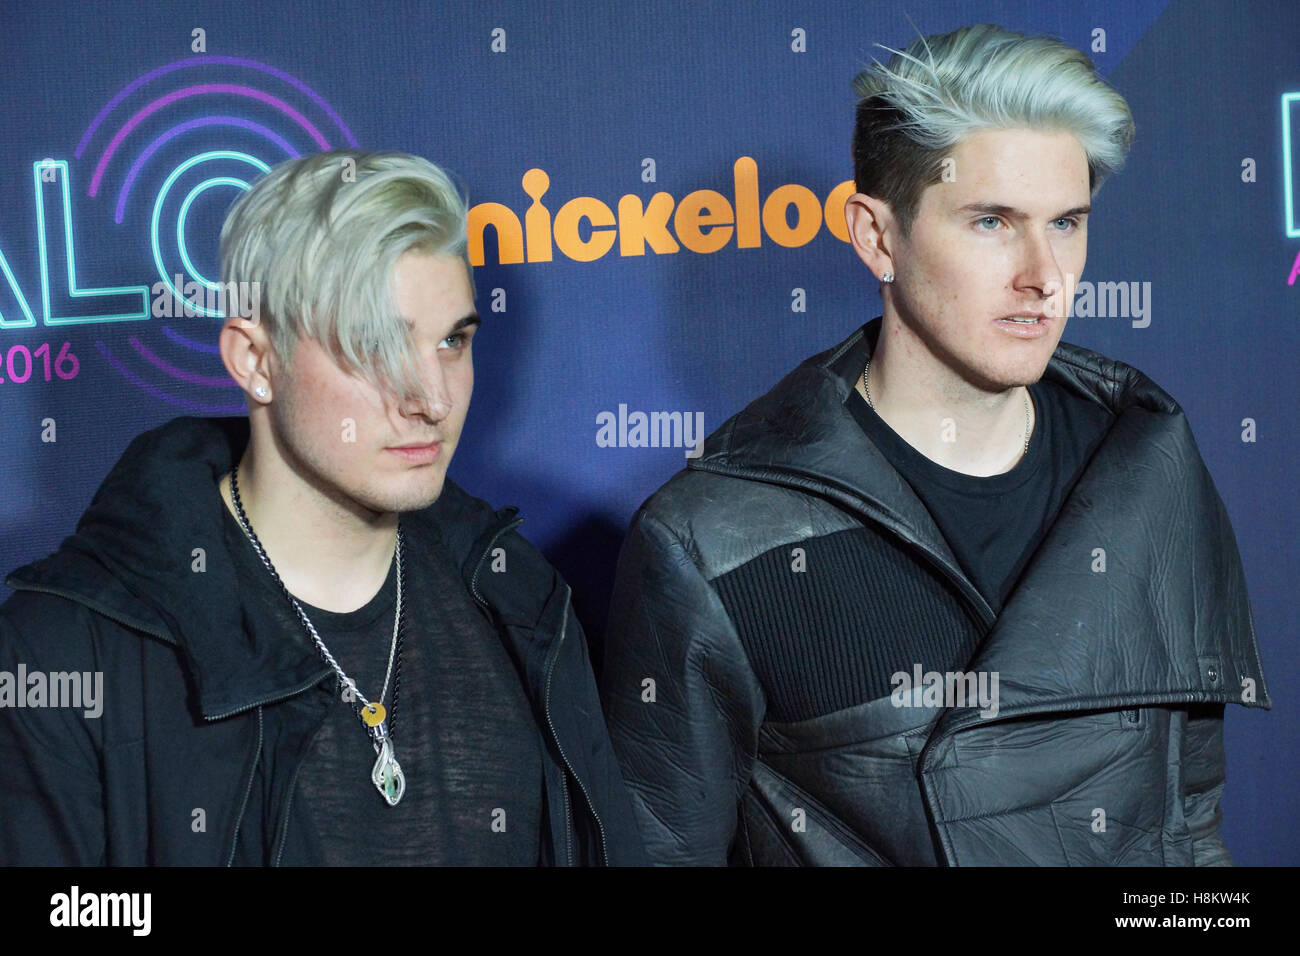 Electronic music production duo Grey November 11, 2016 at The Nickelodeon HALO Awards at Pier 36 in New York, NY. Stock Photo